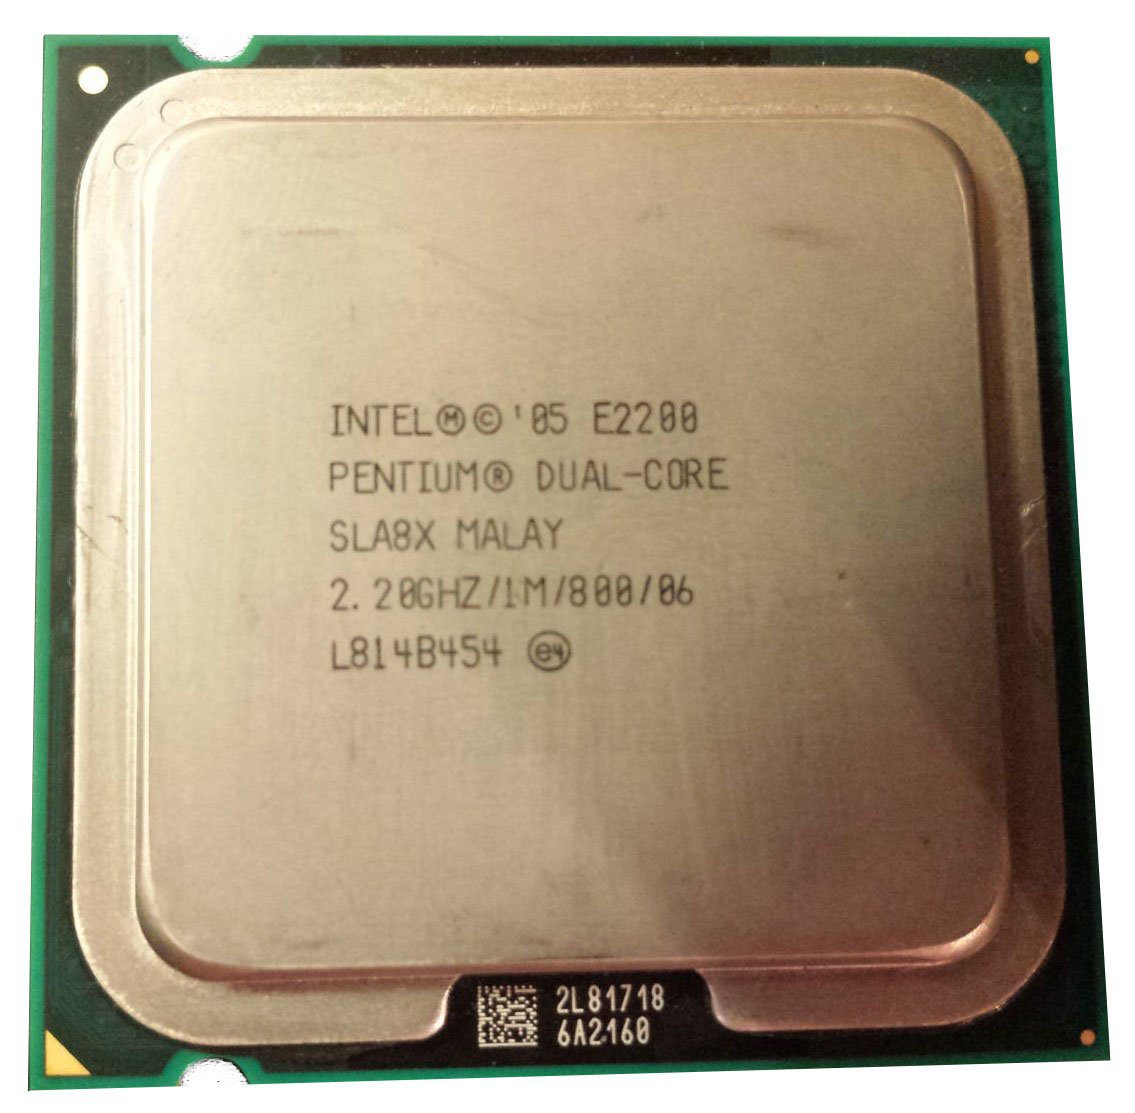 Cpu Processore Intel Pentium Dual Core E2200 SLA8X 2.20Ghz 1M 800 06 socket 775